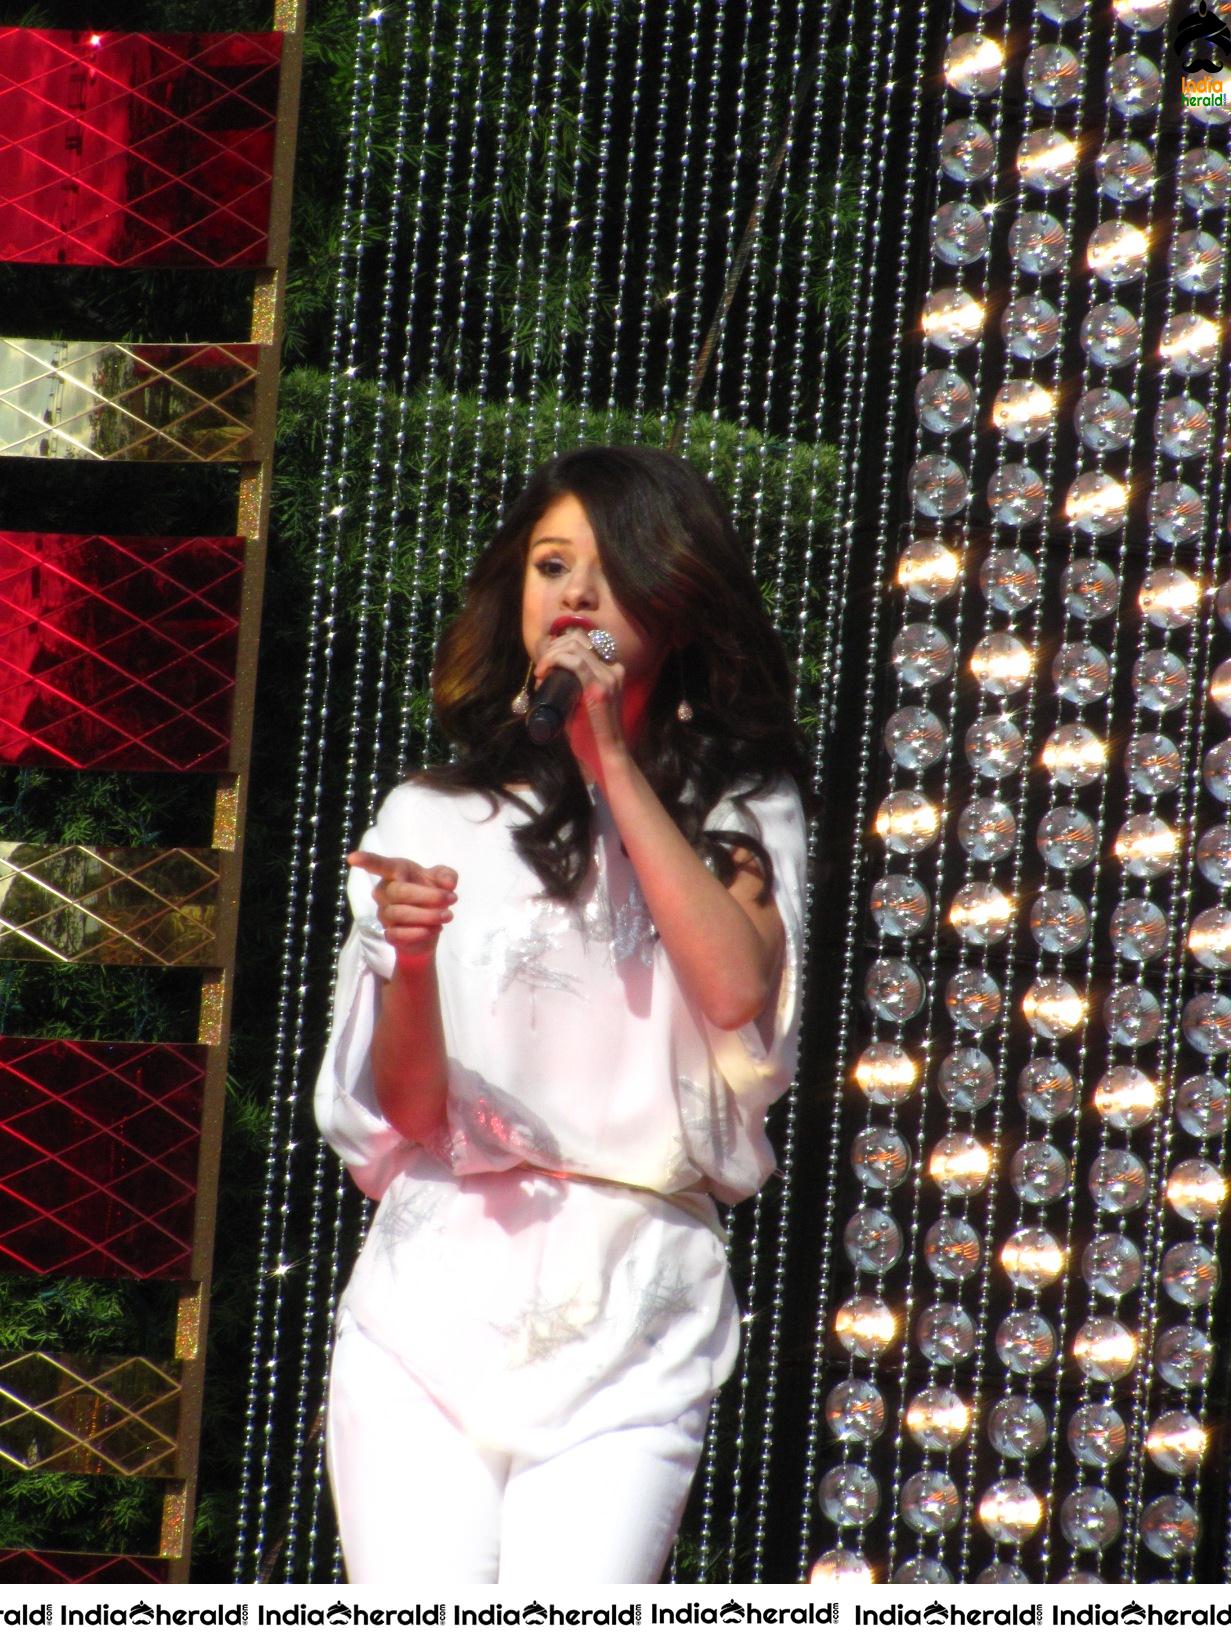 Selena Gomez performs before a huge crowd at Disneyland